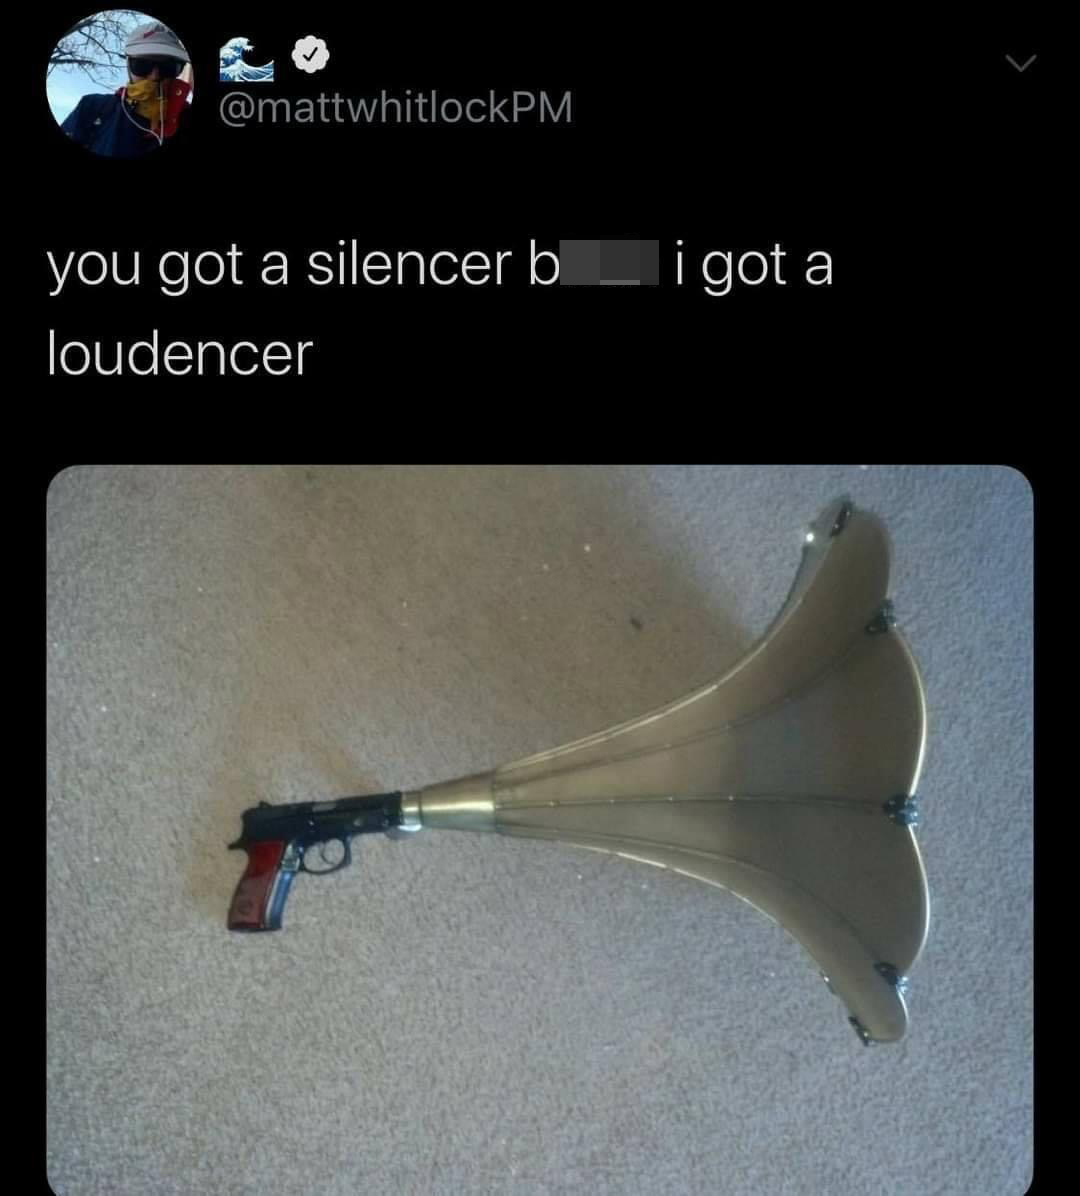 funny pics - you got a silencer i got a loudencer